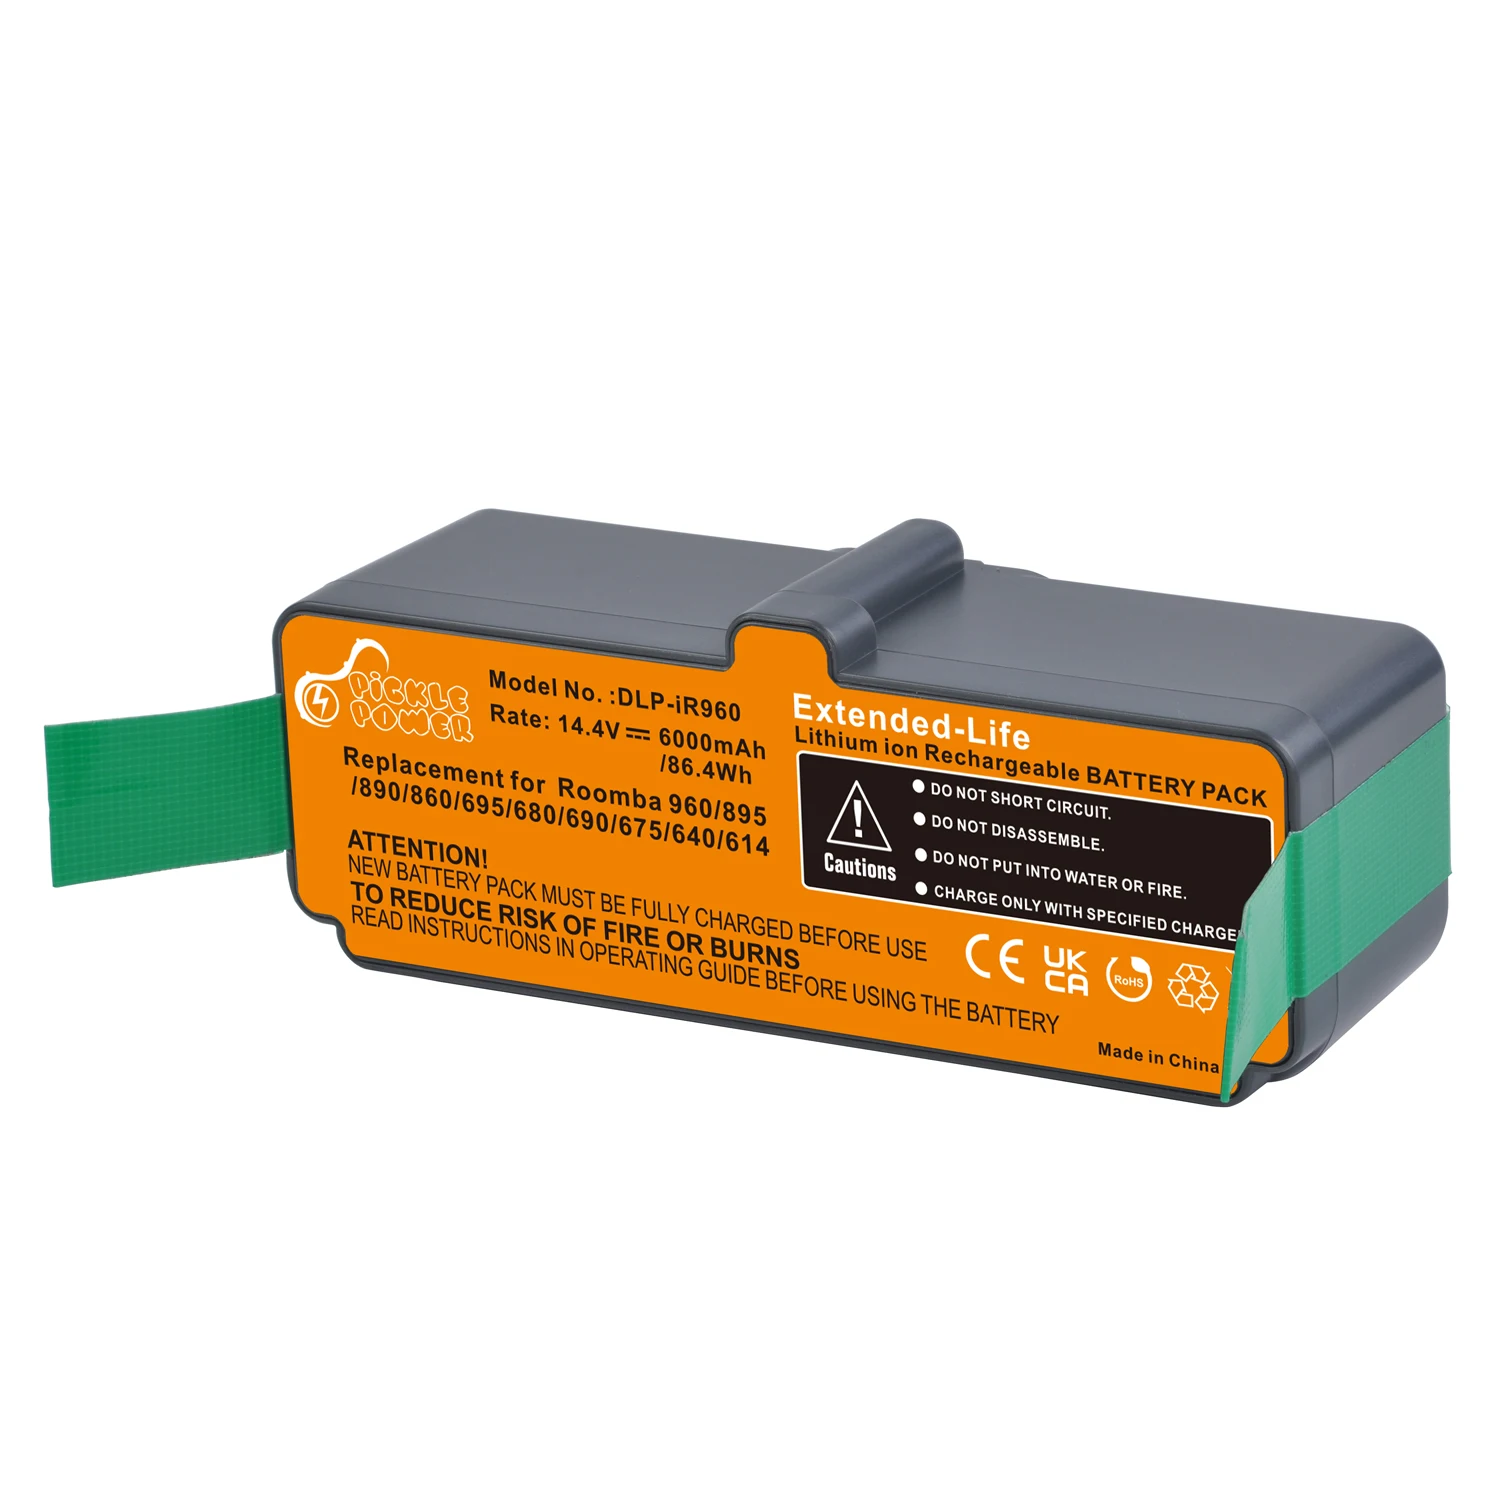 Roomba 980 Battery | Irobot Roomba 600 Battery | Irobot 980 Battery |- Roomba  Battery - Aliexpress